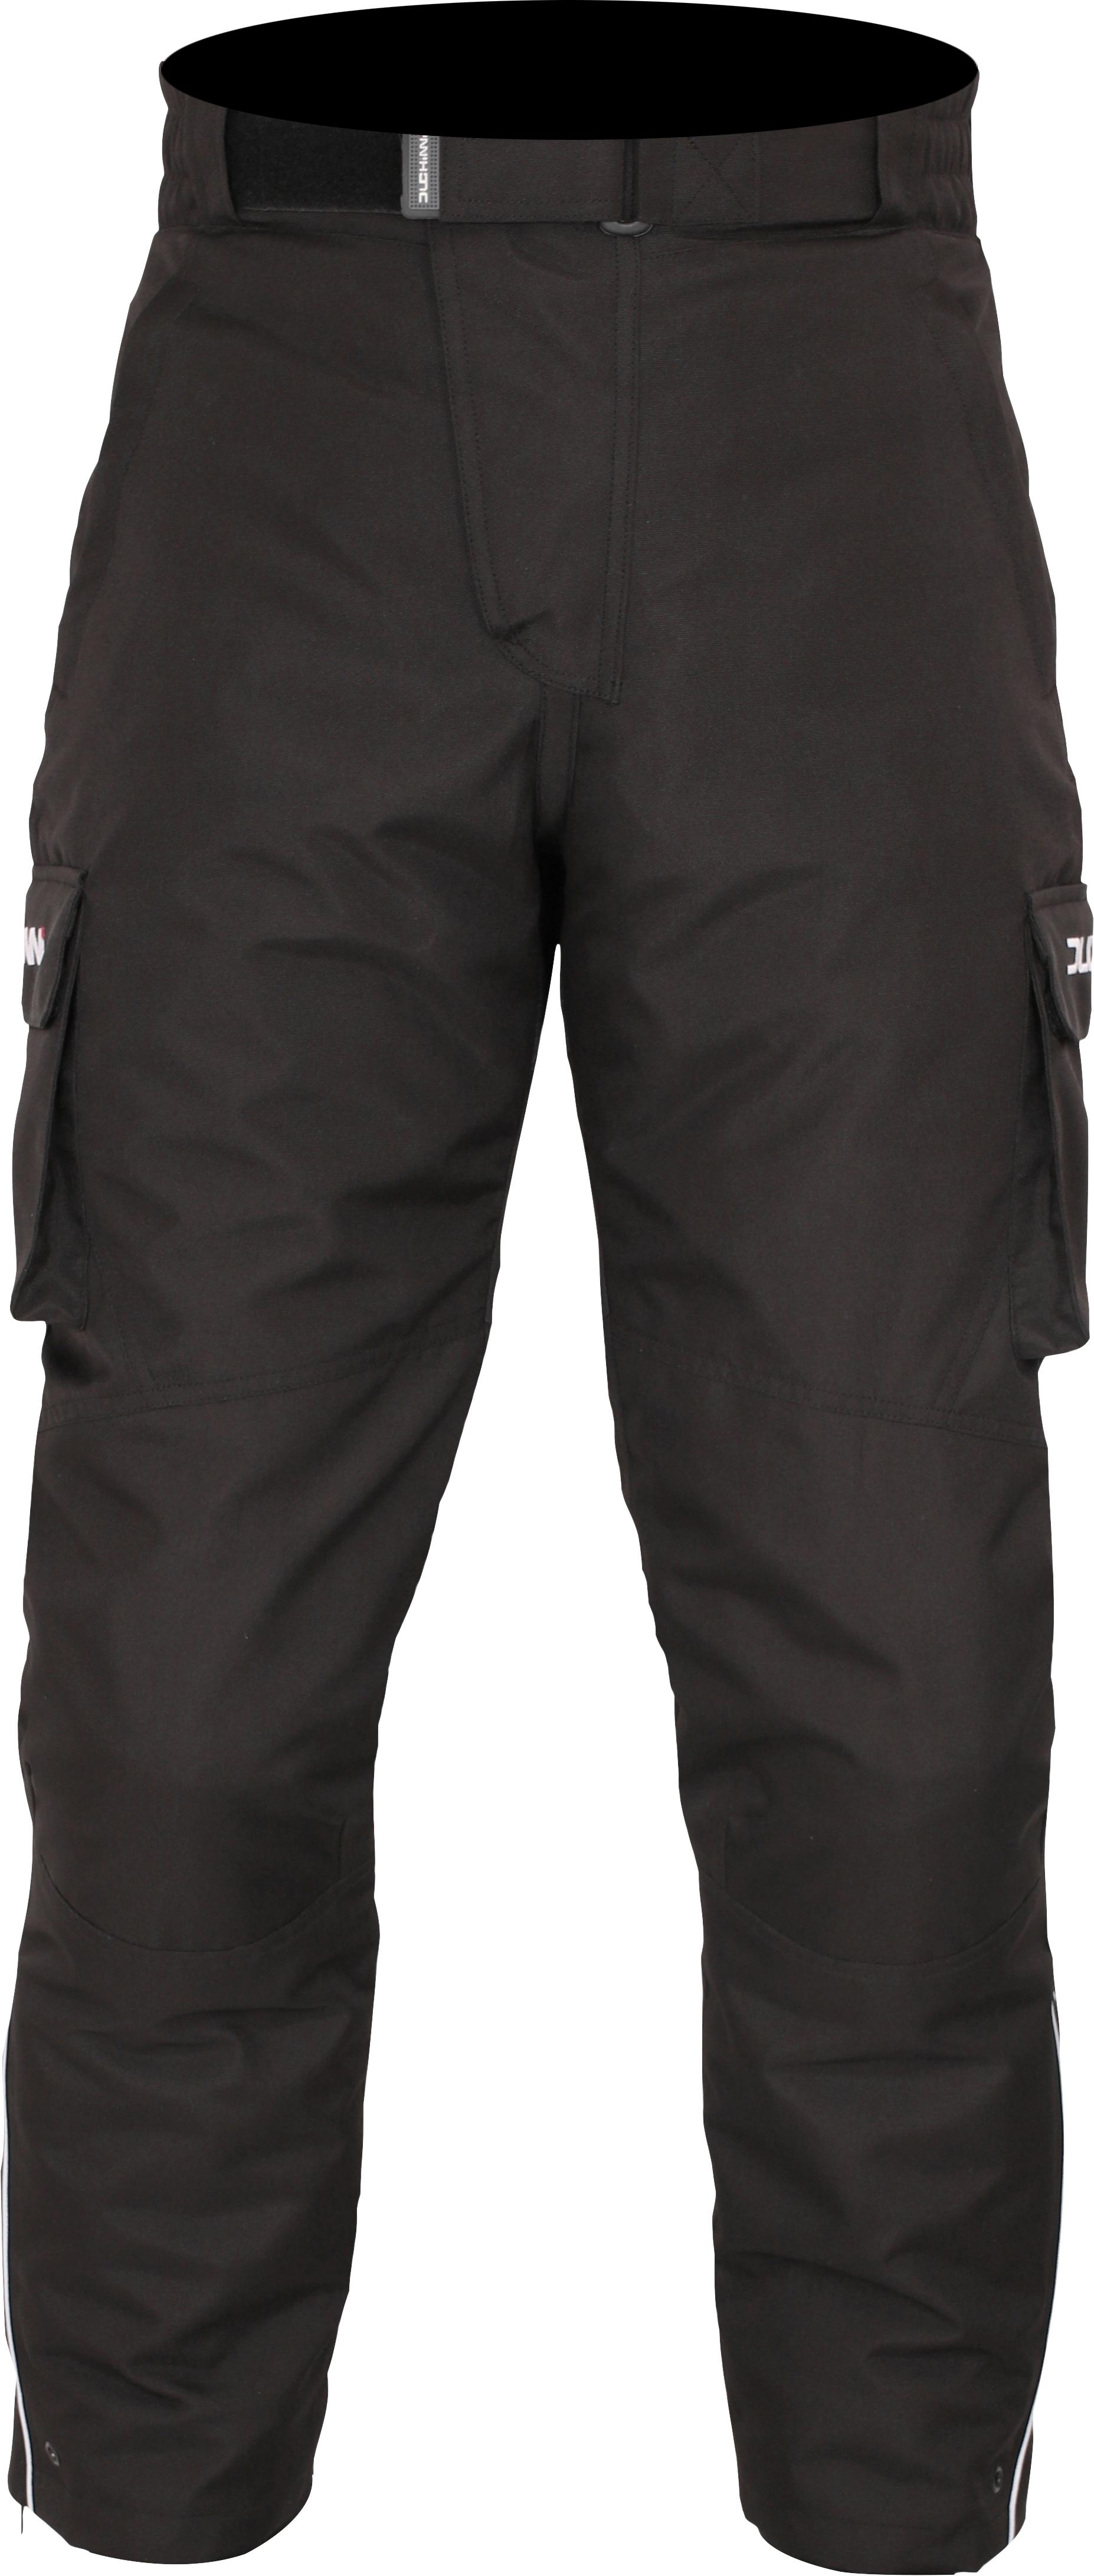 Duchinni Pacific Motorcycle Short Jeans - Black, 10Xl